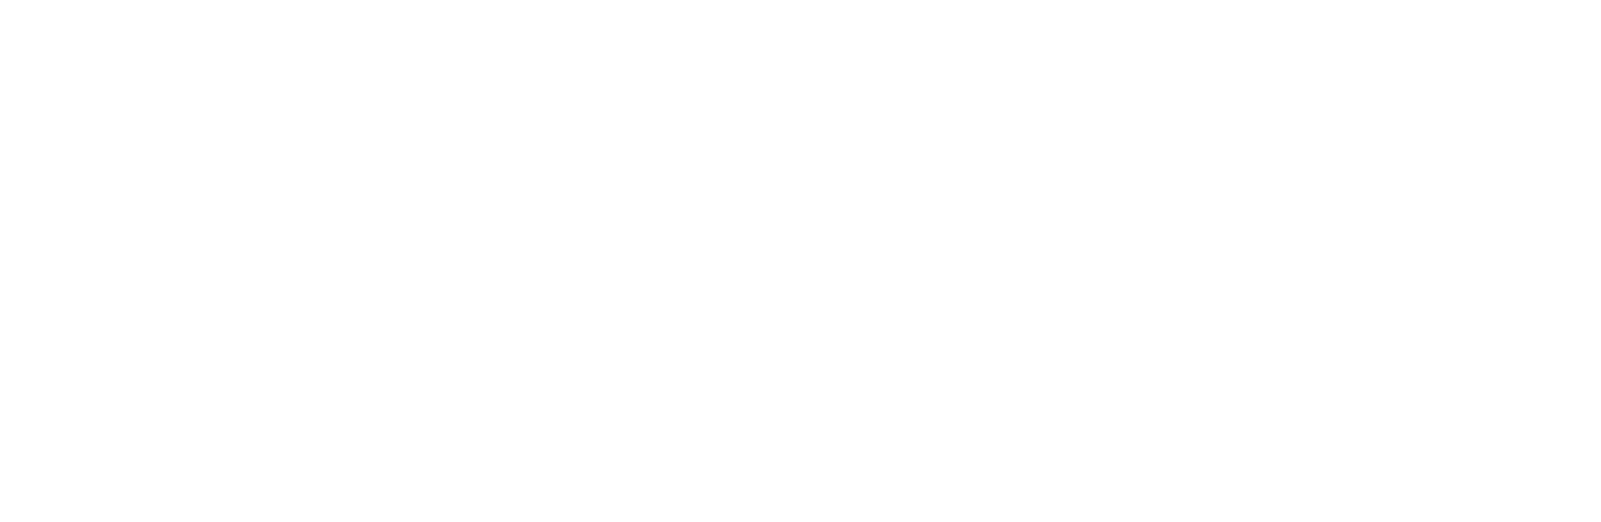 Corebridge Financial Logo groß für dunkle Hintergründe (transparentes PNG)